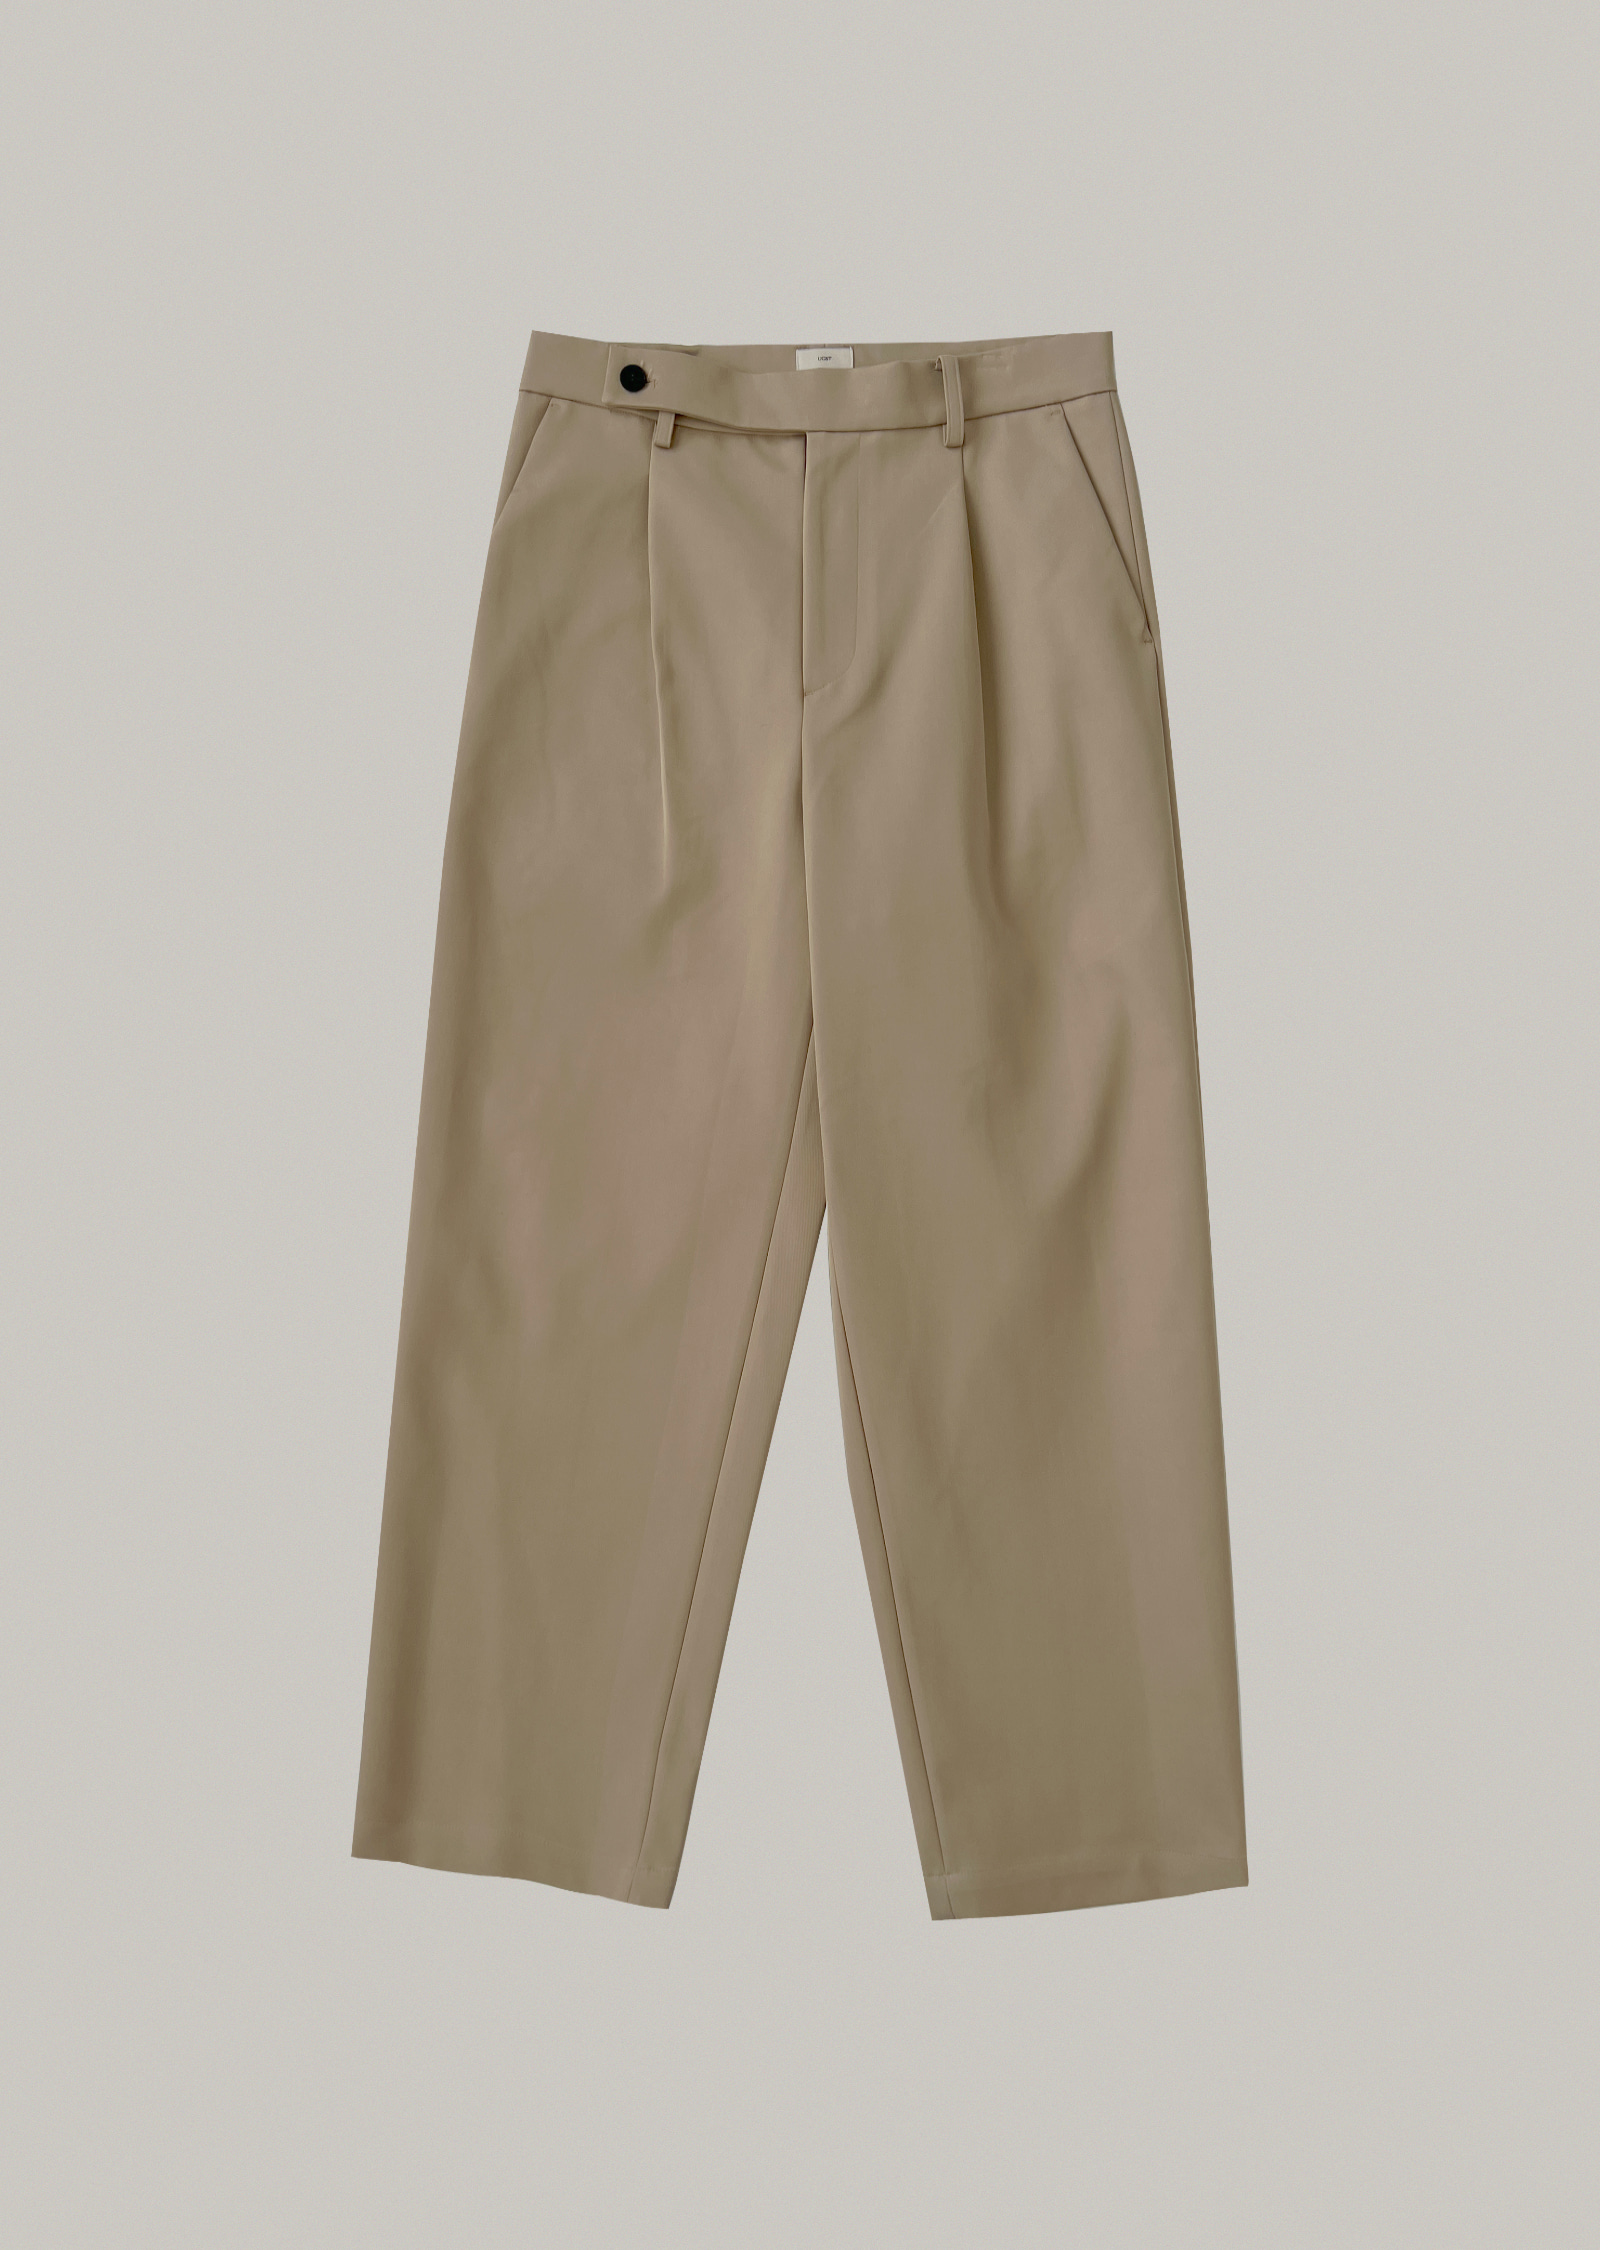 volume pants (beige)